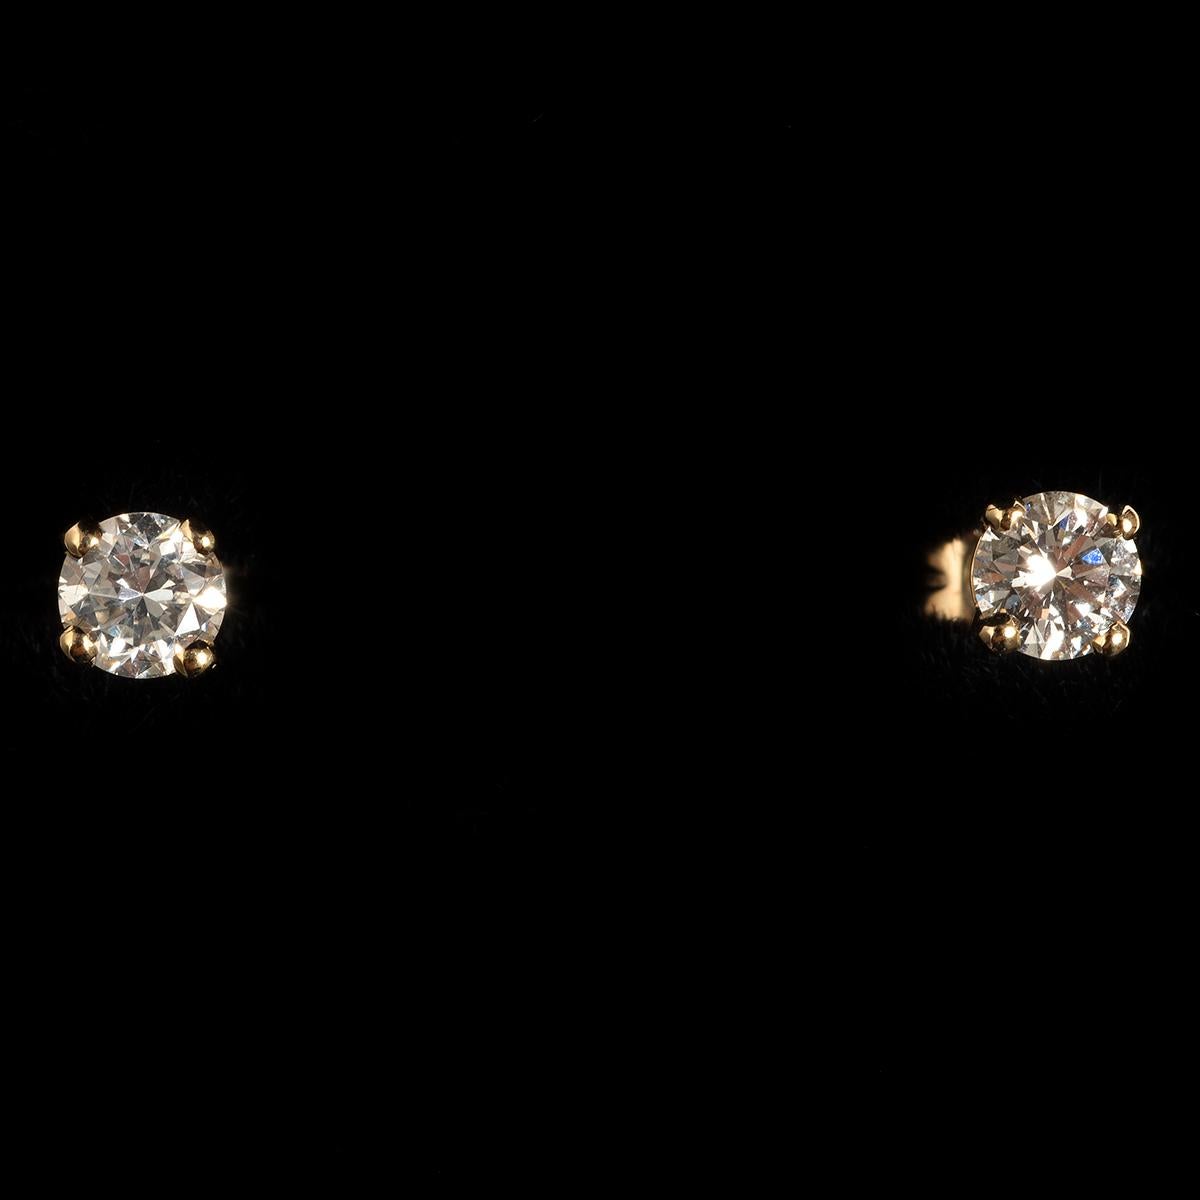 .9 carat diamond earrings